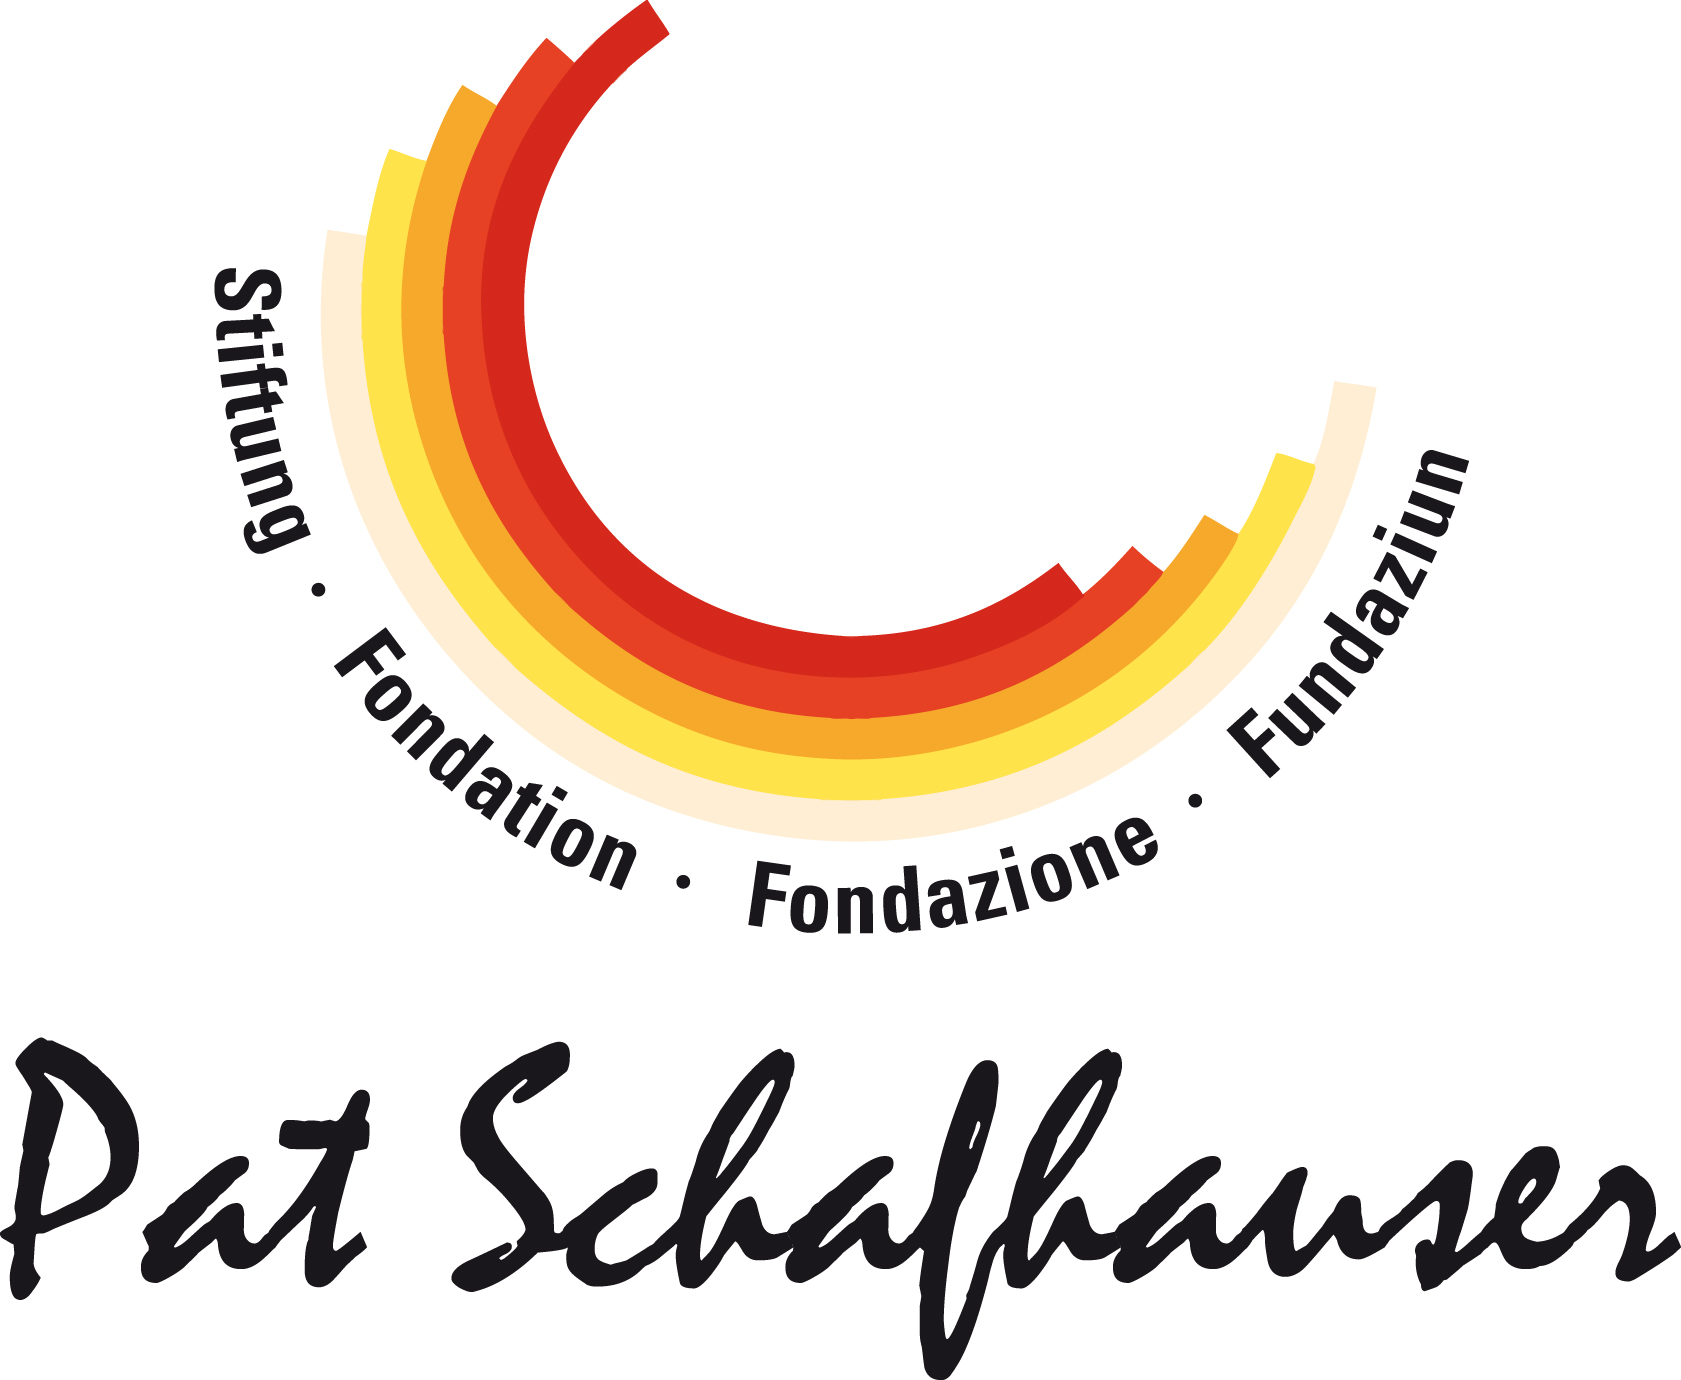 HCL-Fondazione Pat schaffauser logo